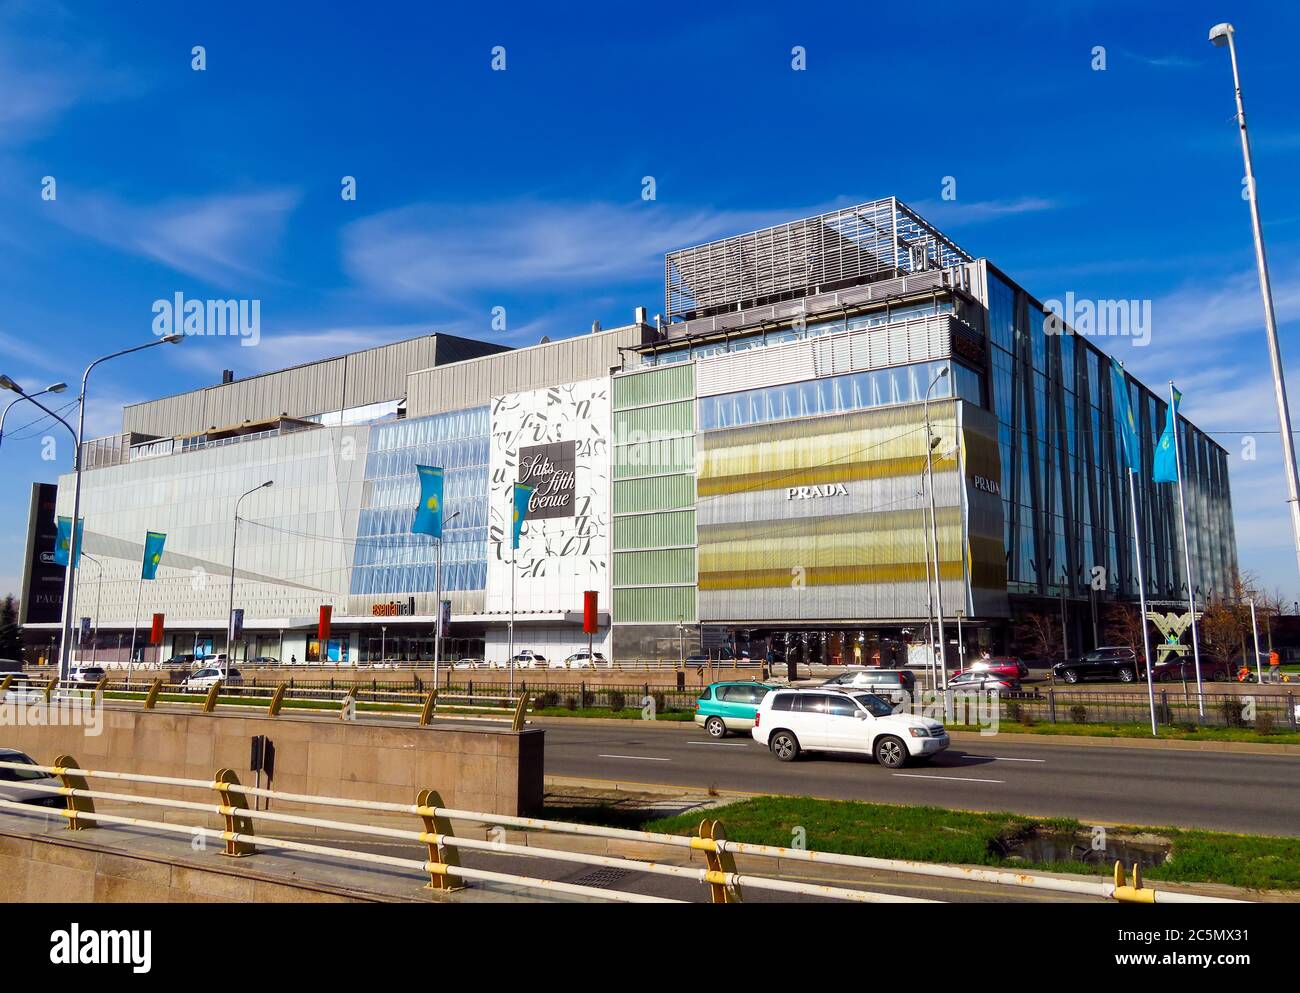 Almaty, Kazakhstan - November 9, 2017: The Esentai Mall on Al-Farabi street  in Almaty, Kazakhstan. It is a complex of buildings of Business Centre of  Stock Photo - Alamy